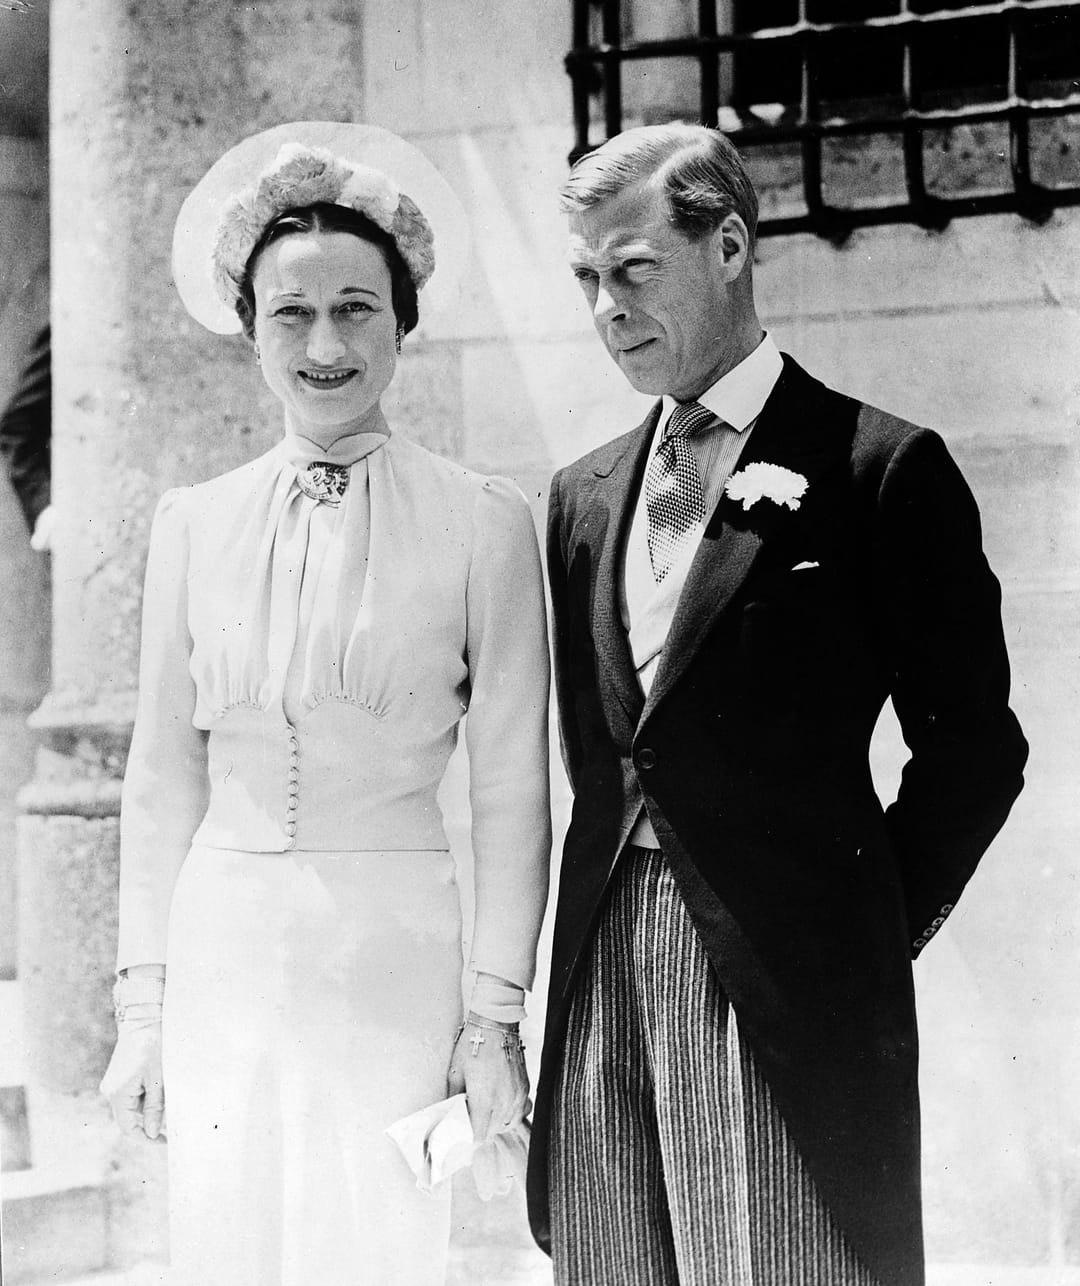 On June 3, 1937, the Duke of Windsor married Wallis Simpson